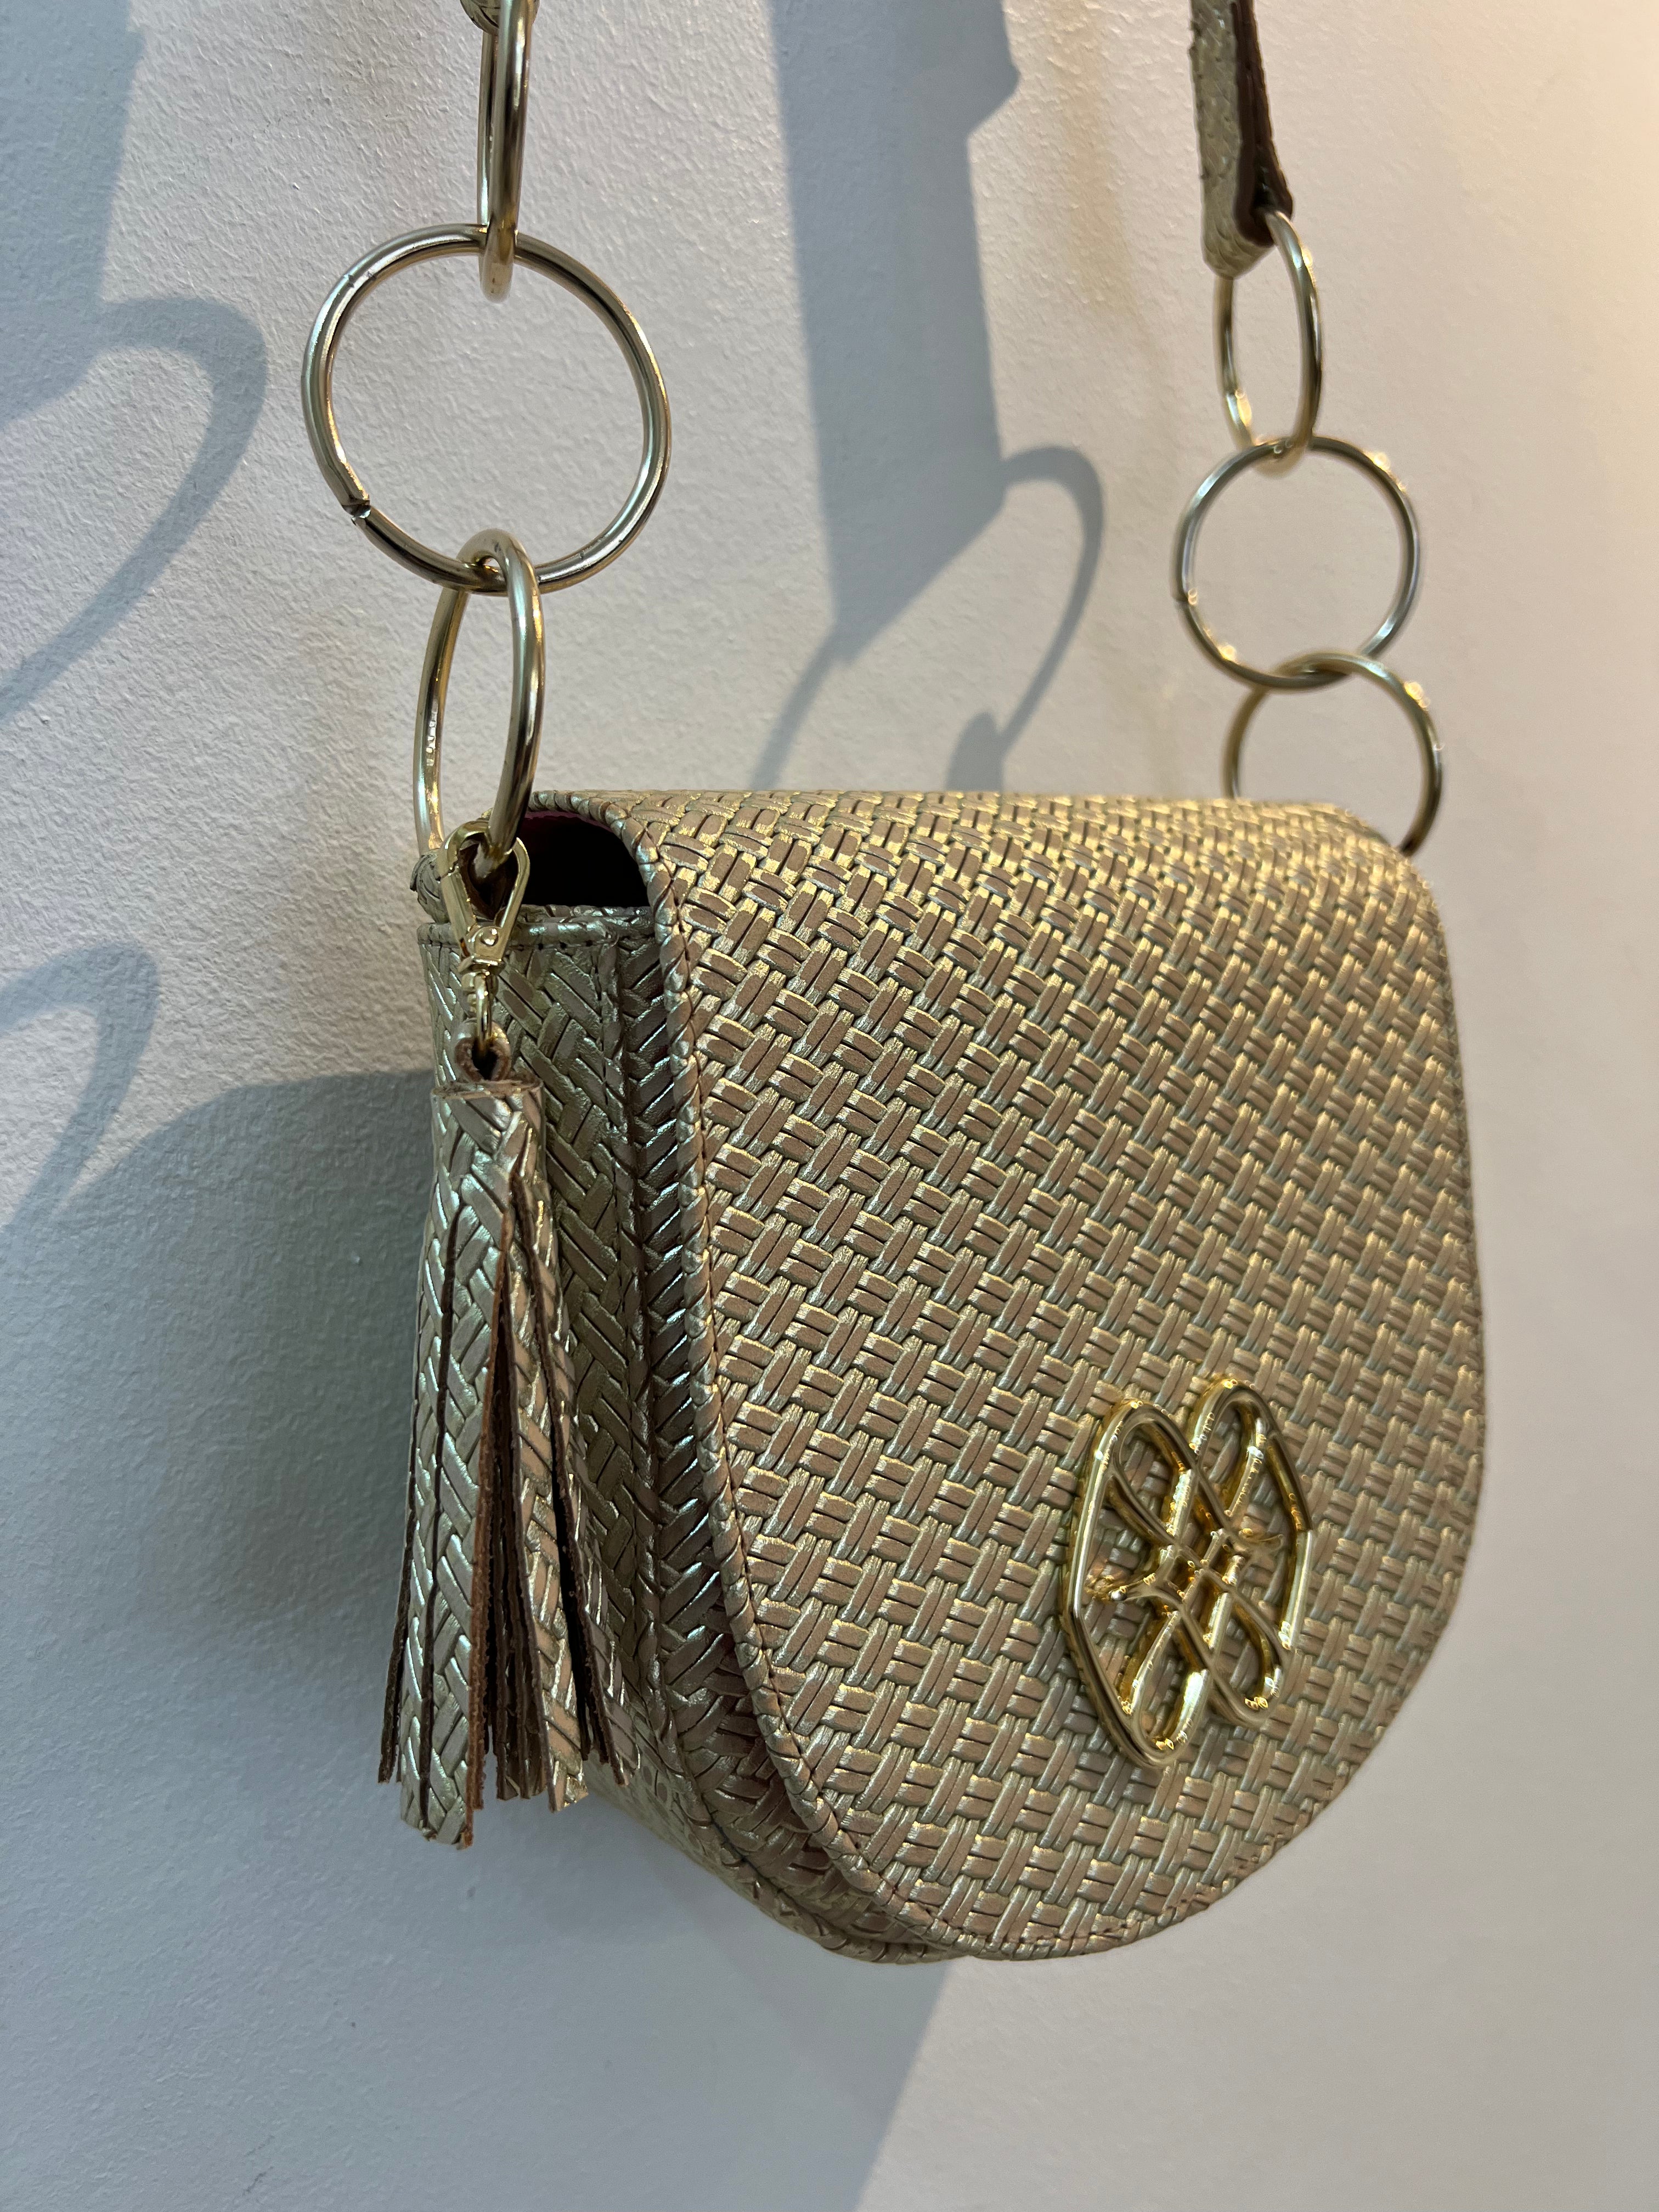 Hetre Alresford Hampshire Accessory Store Cuple Metallic Gold Shoulder Bag